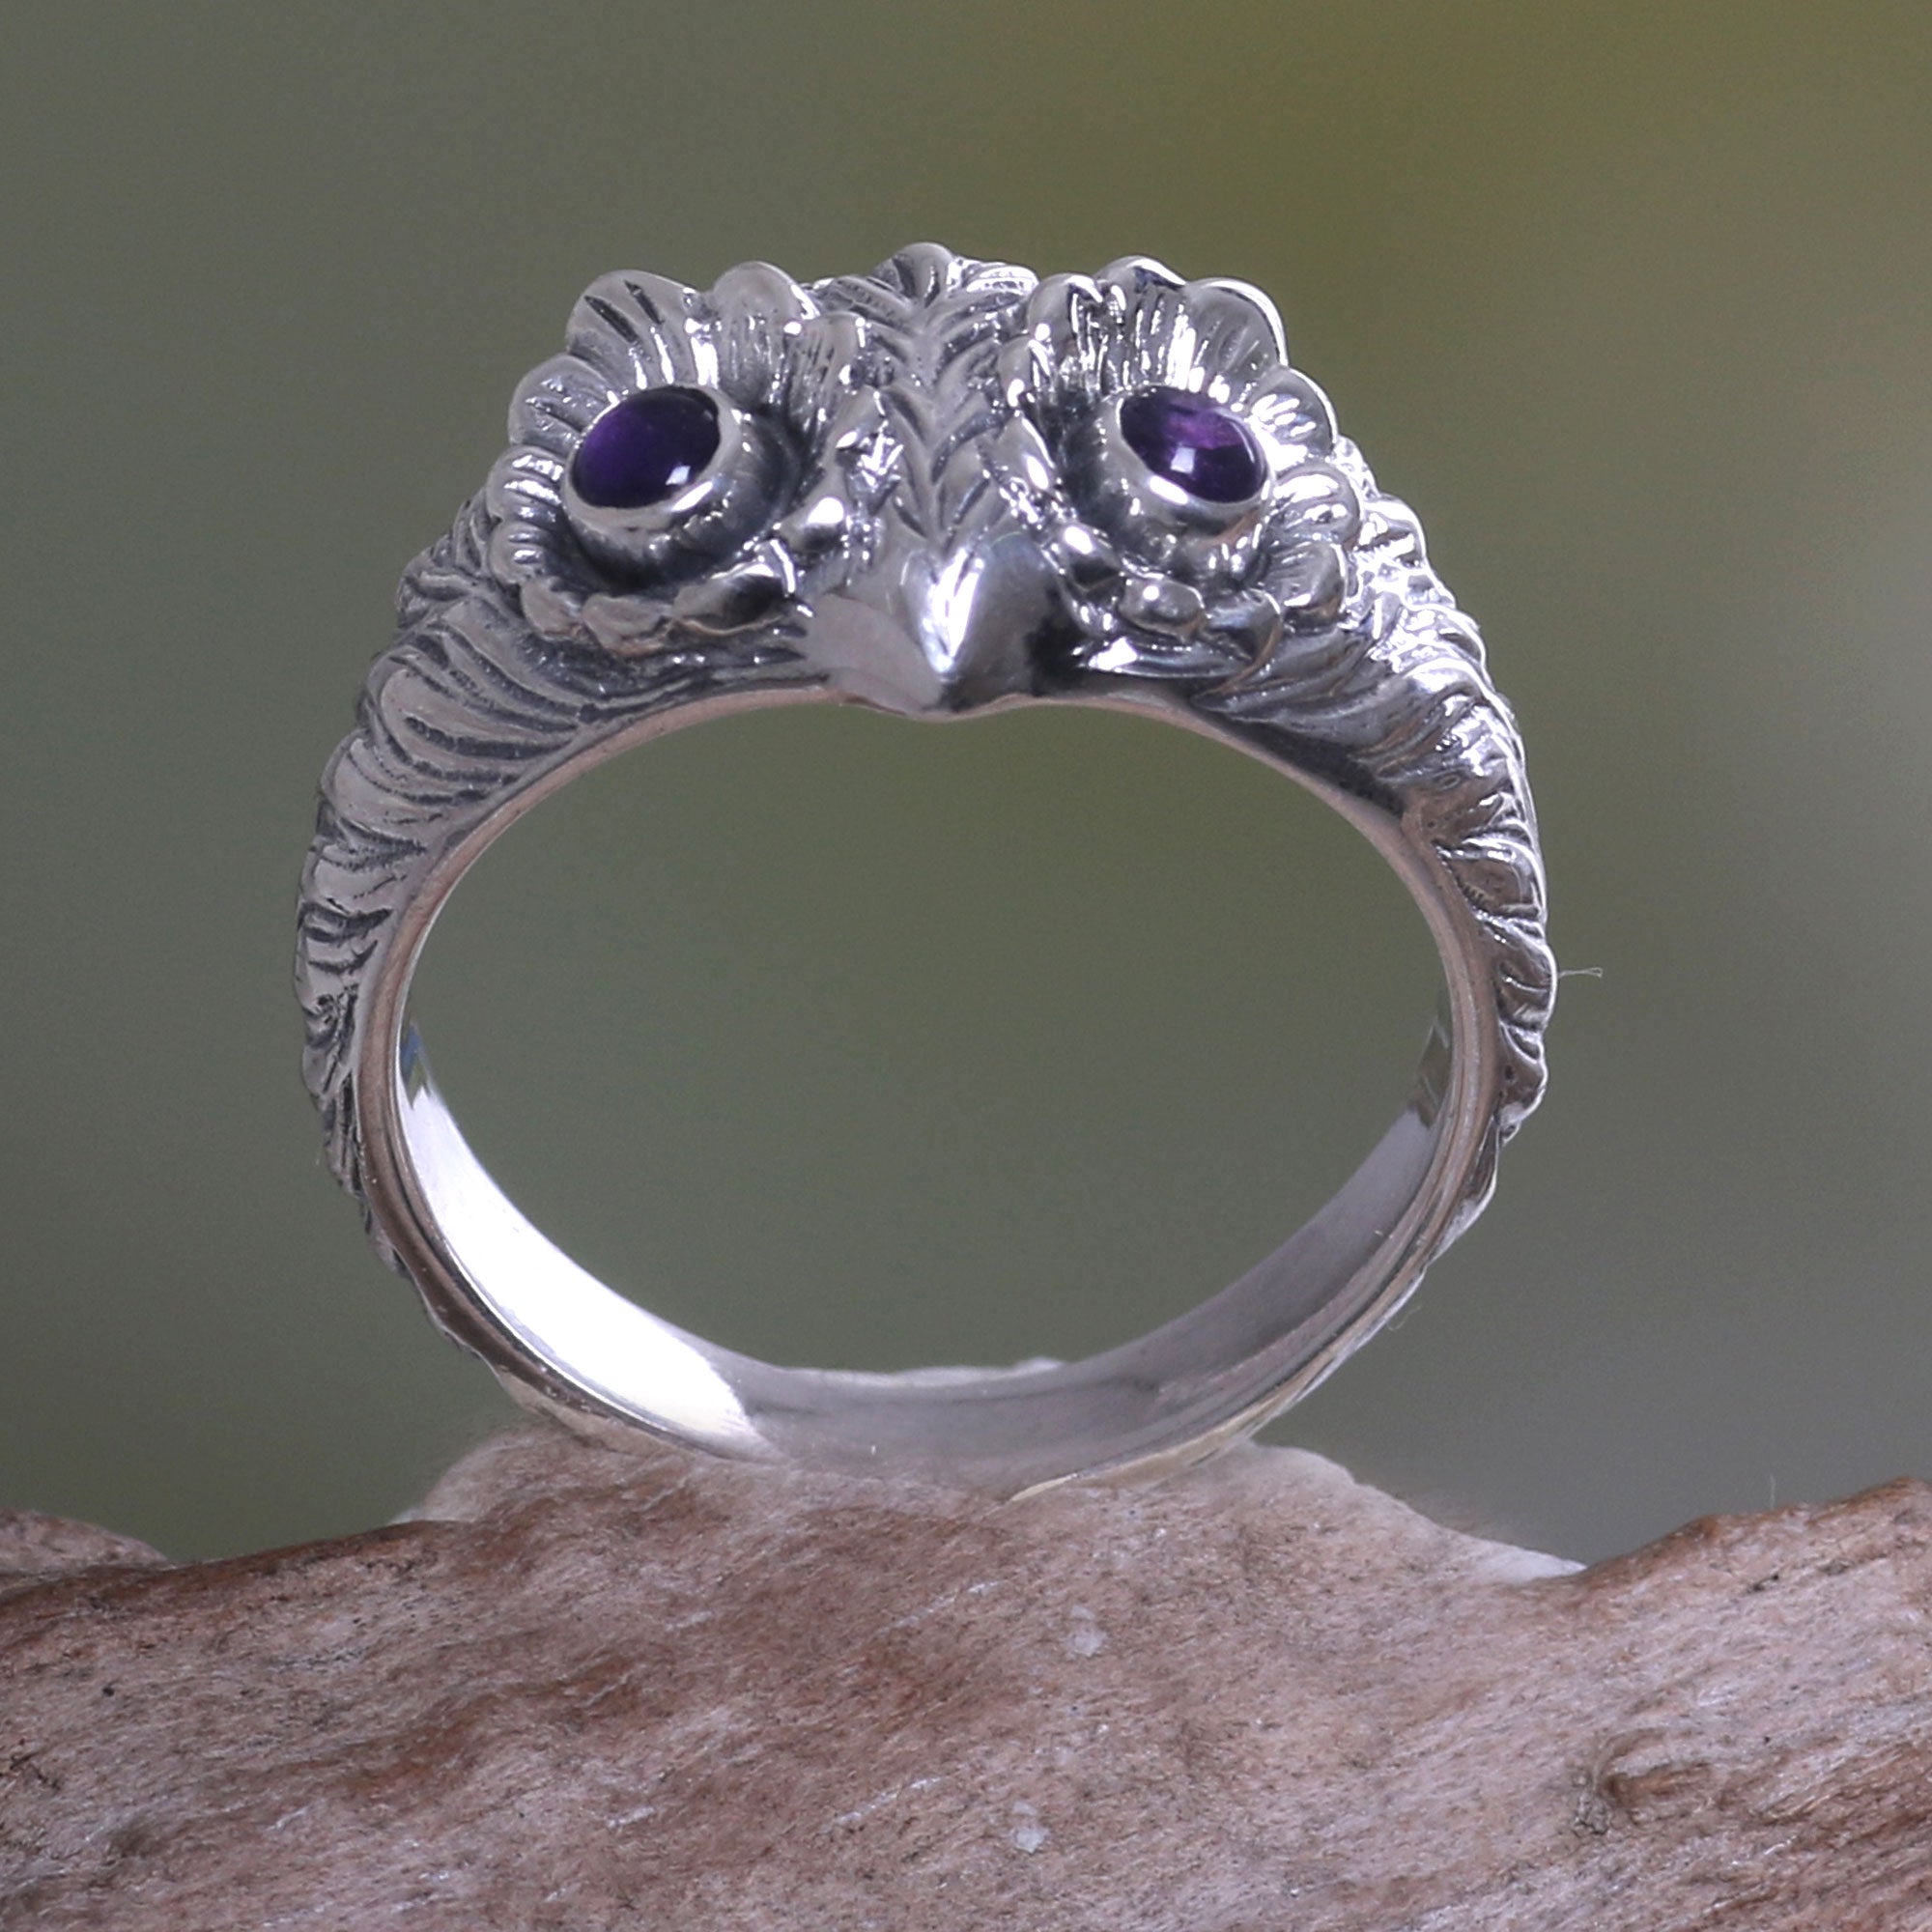 NOVICA Owl Wisdom Amethyst & Silver Band Ring - Size 8